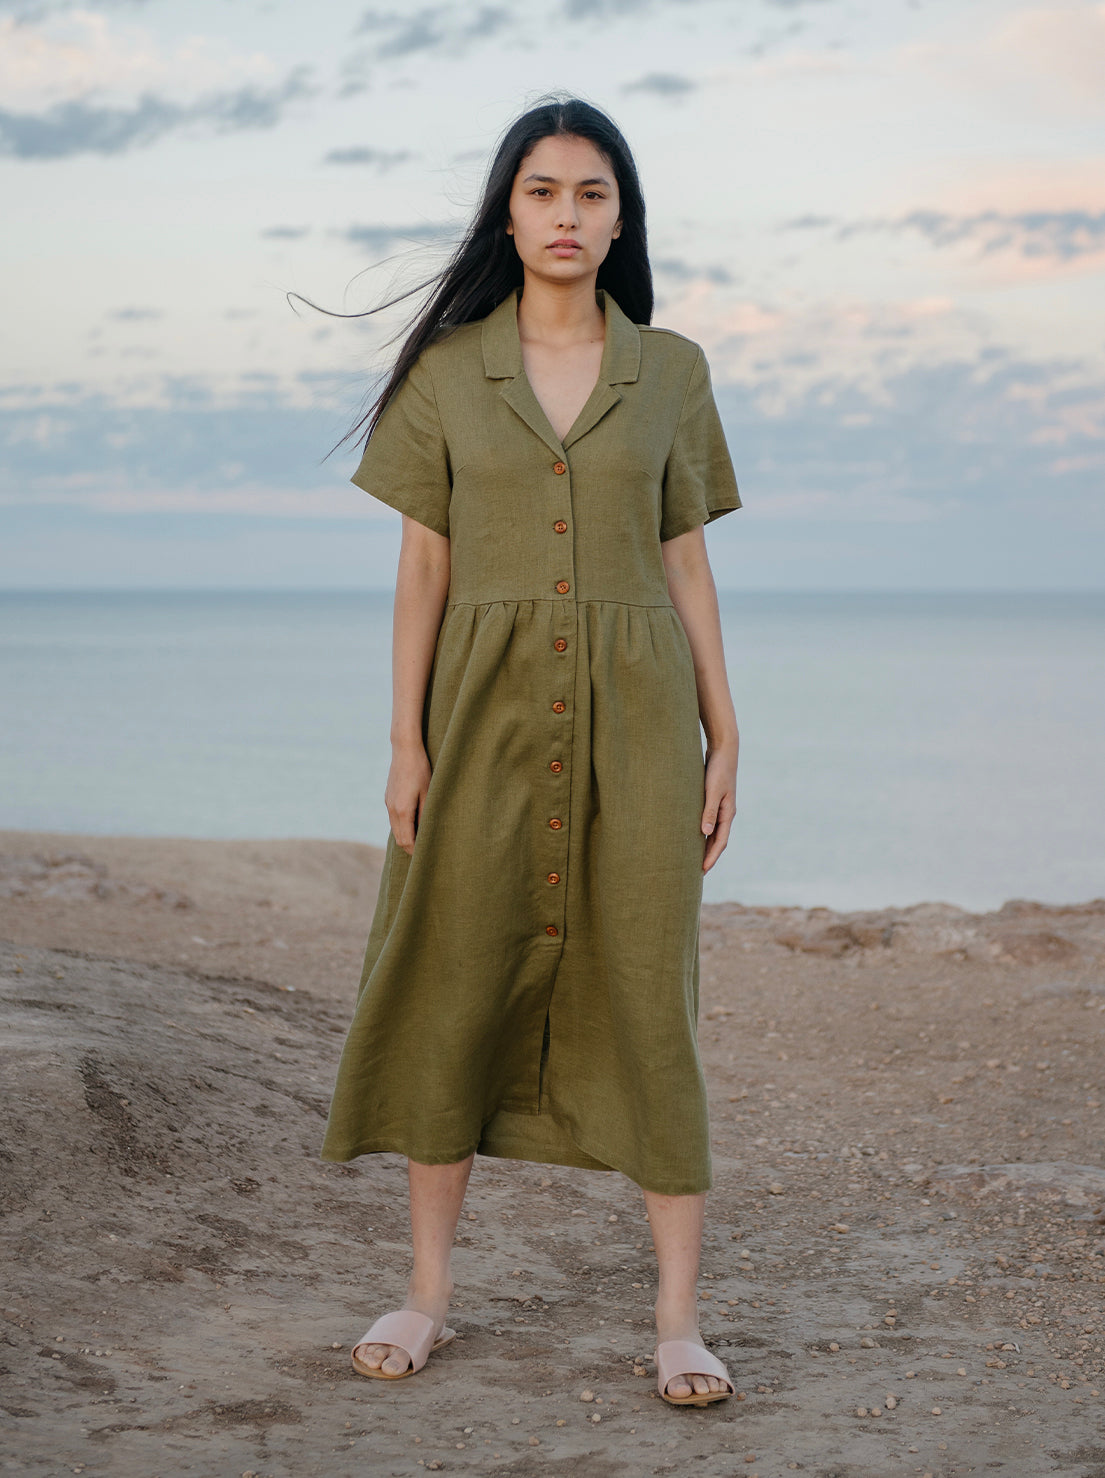 Hemp Clothing Australia - Day Dress - Olive